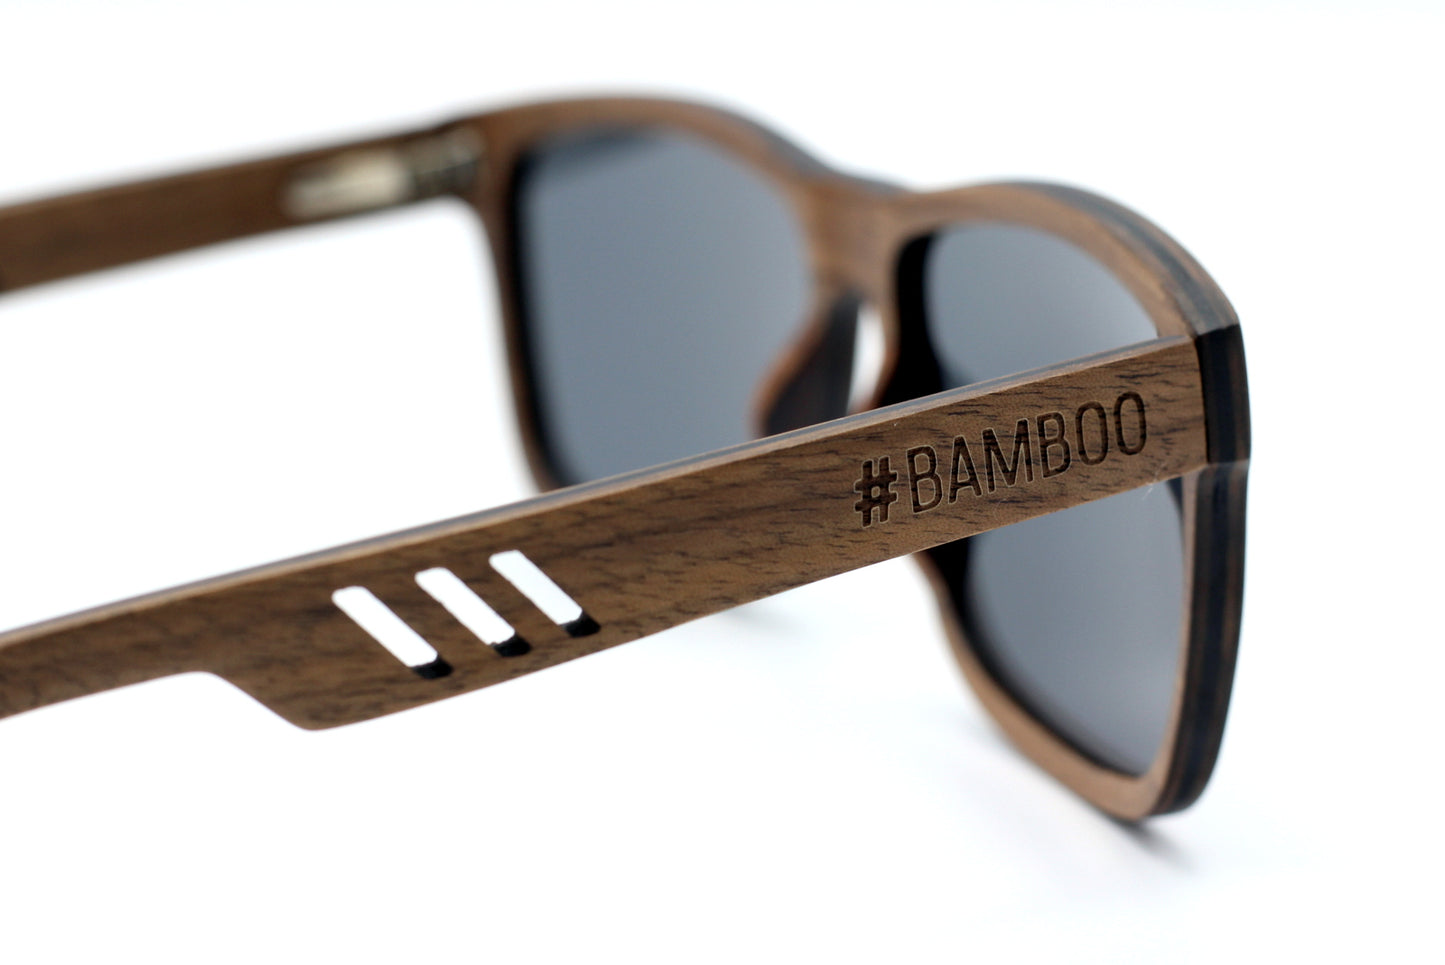 SOLID WOOD Men's Sunglasses Zebra Wood Grey Polarised Lens - THE BRILL - Hashtag Bamboo